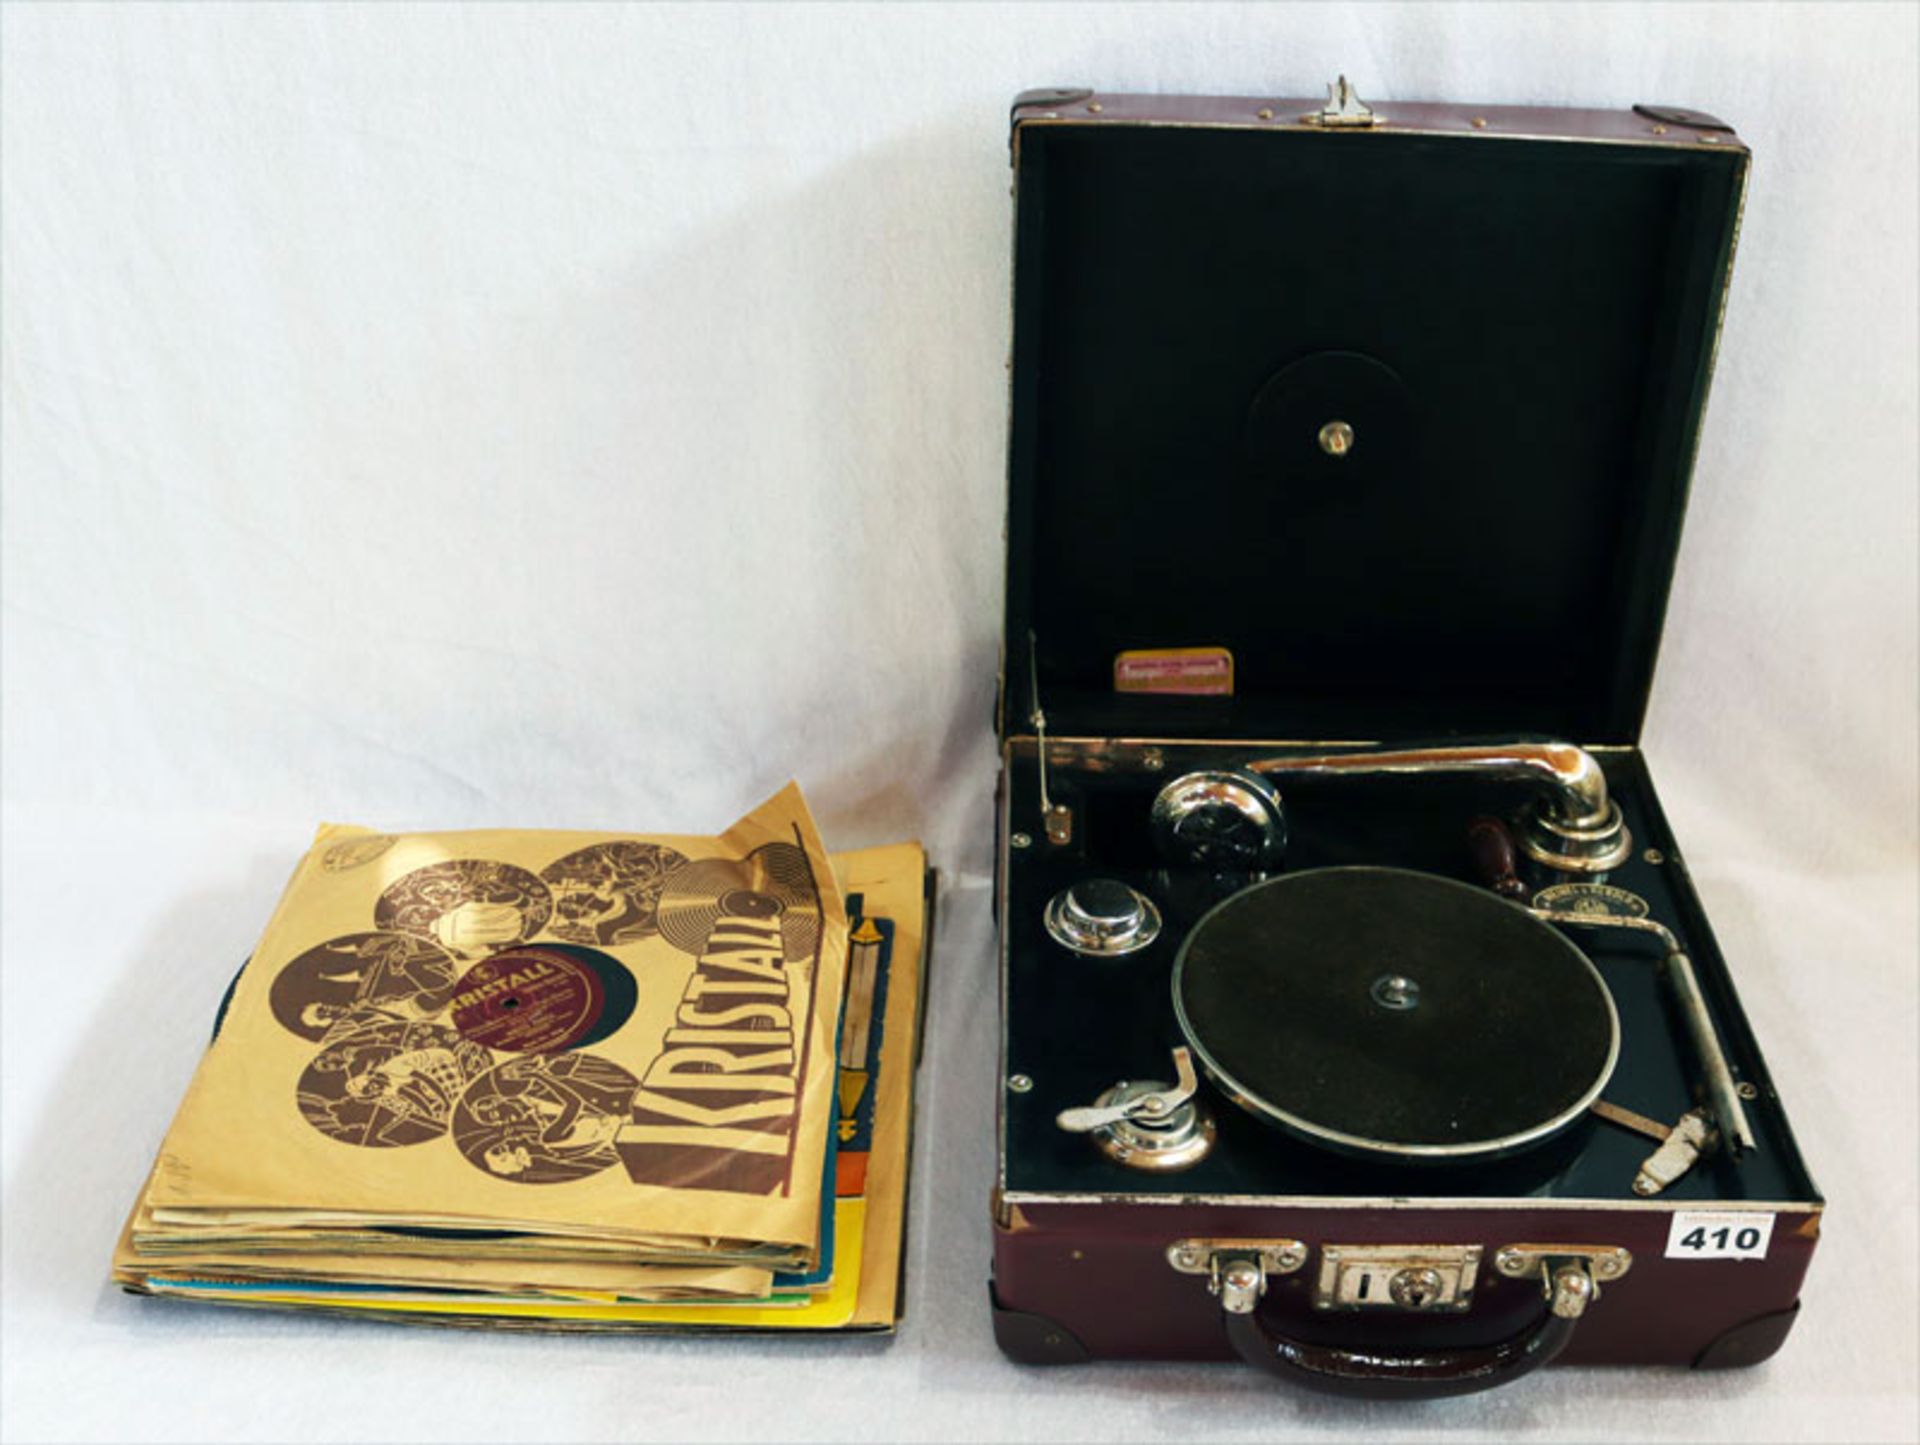 Koffer Grammophon Meinel & Herold Klingenthal i. Sa., mit diversen Platten, Funktion nicht